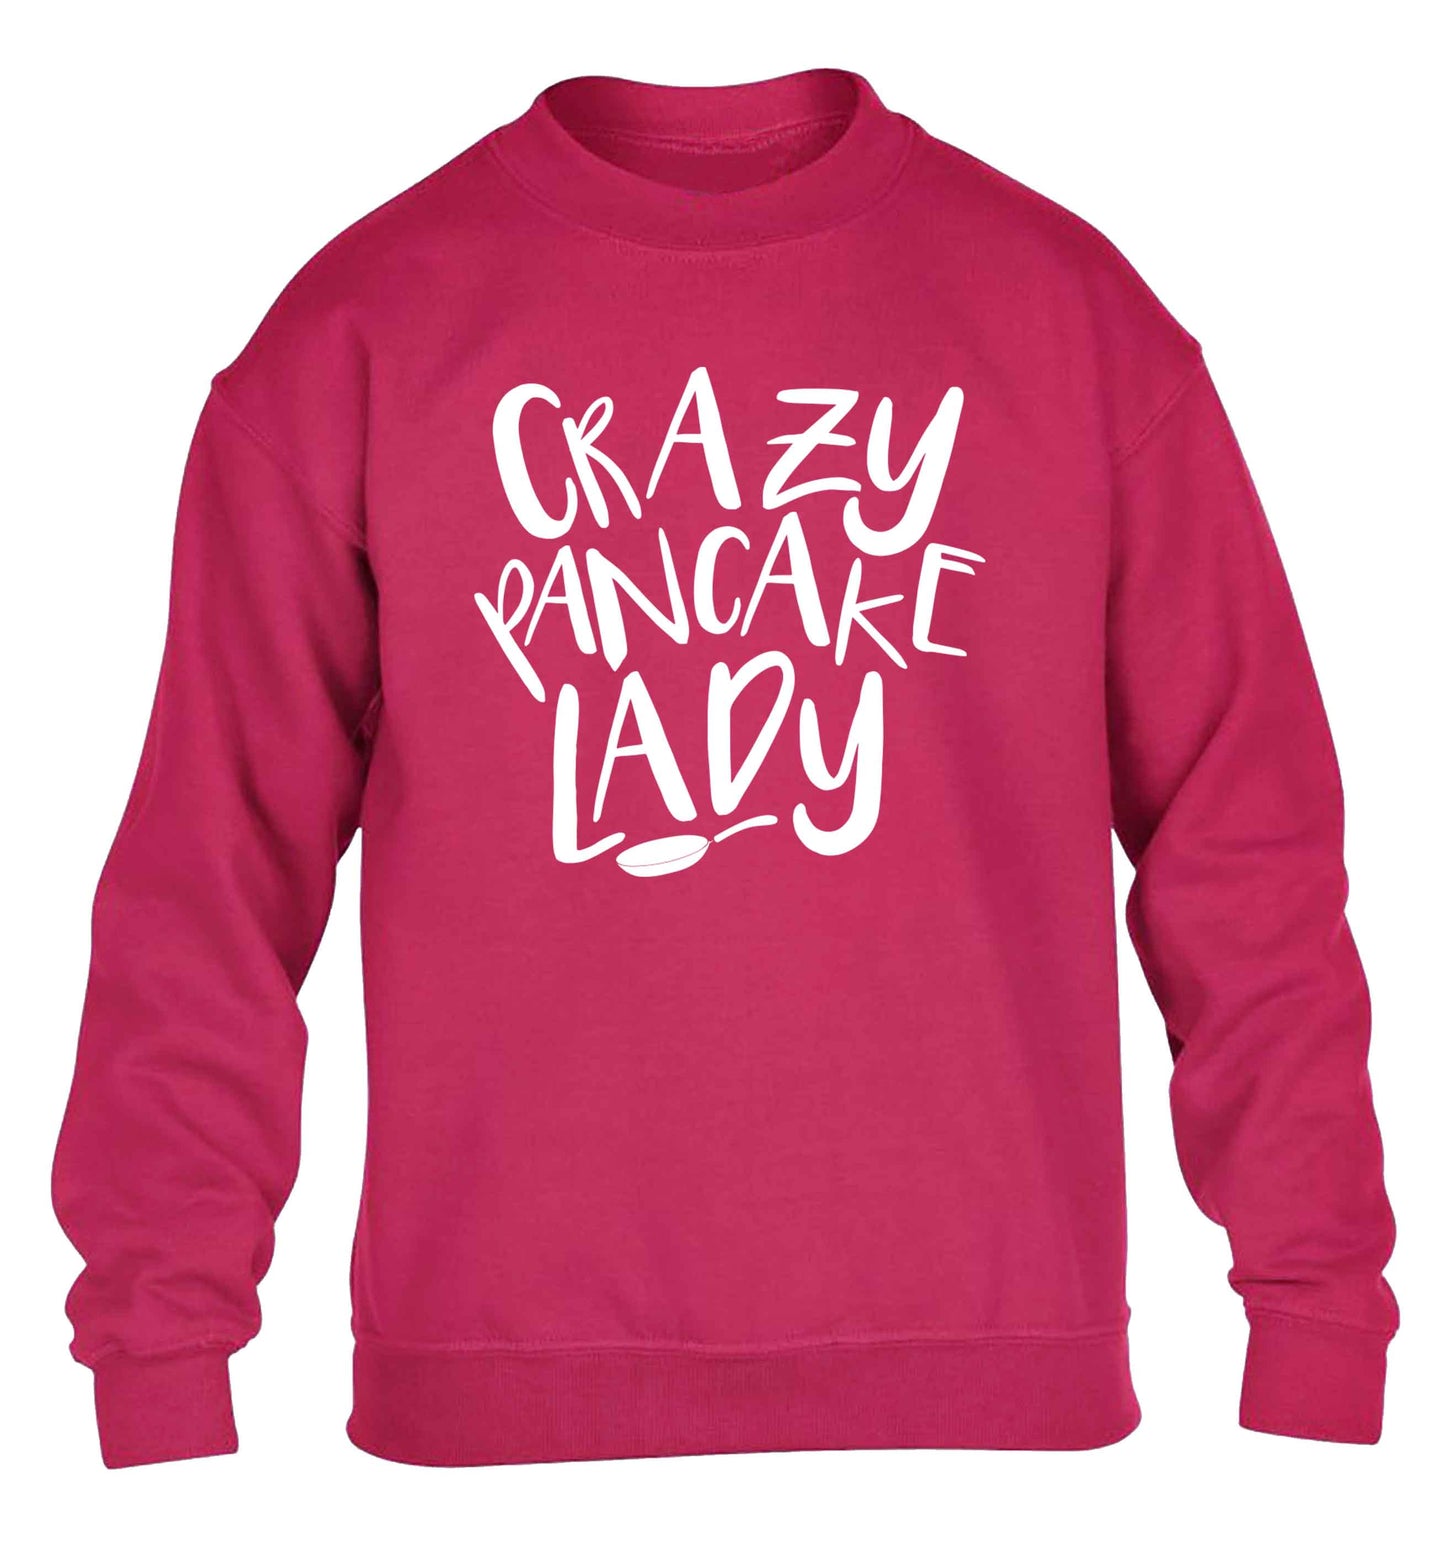 Crazy pancake lady children's pink sweater 12-13 Years